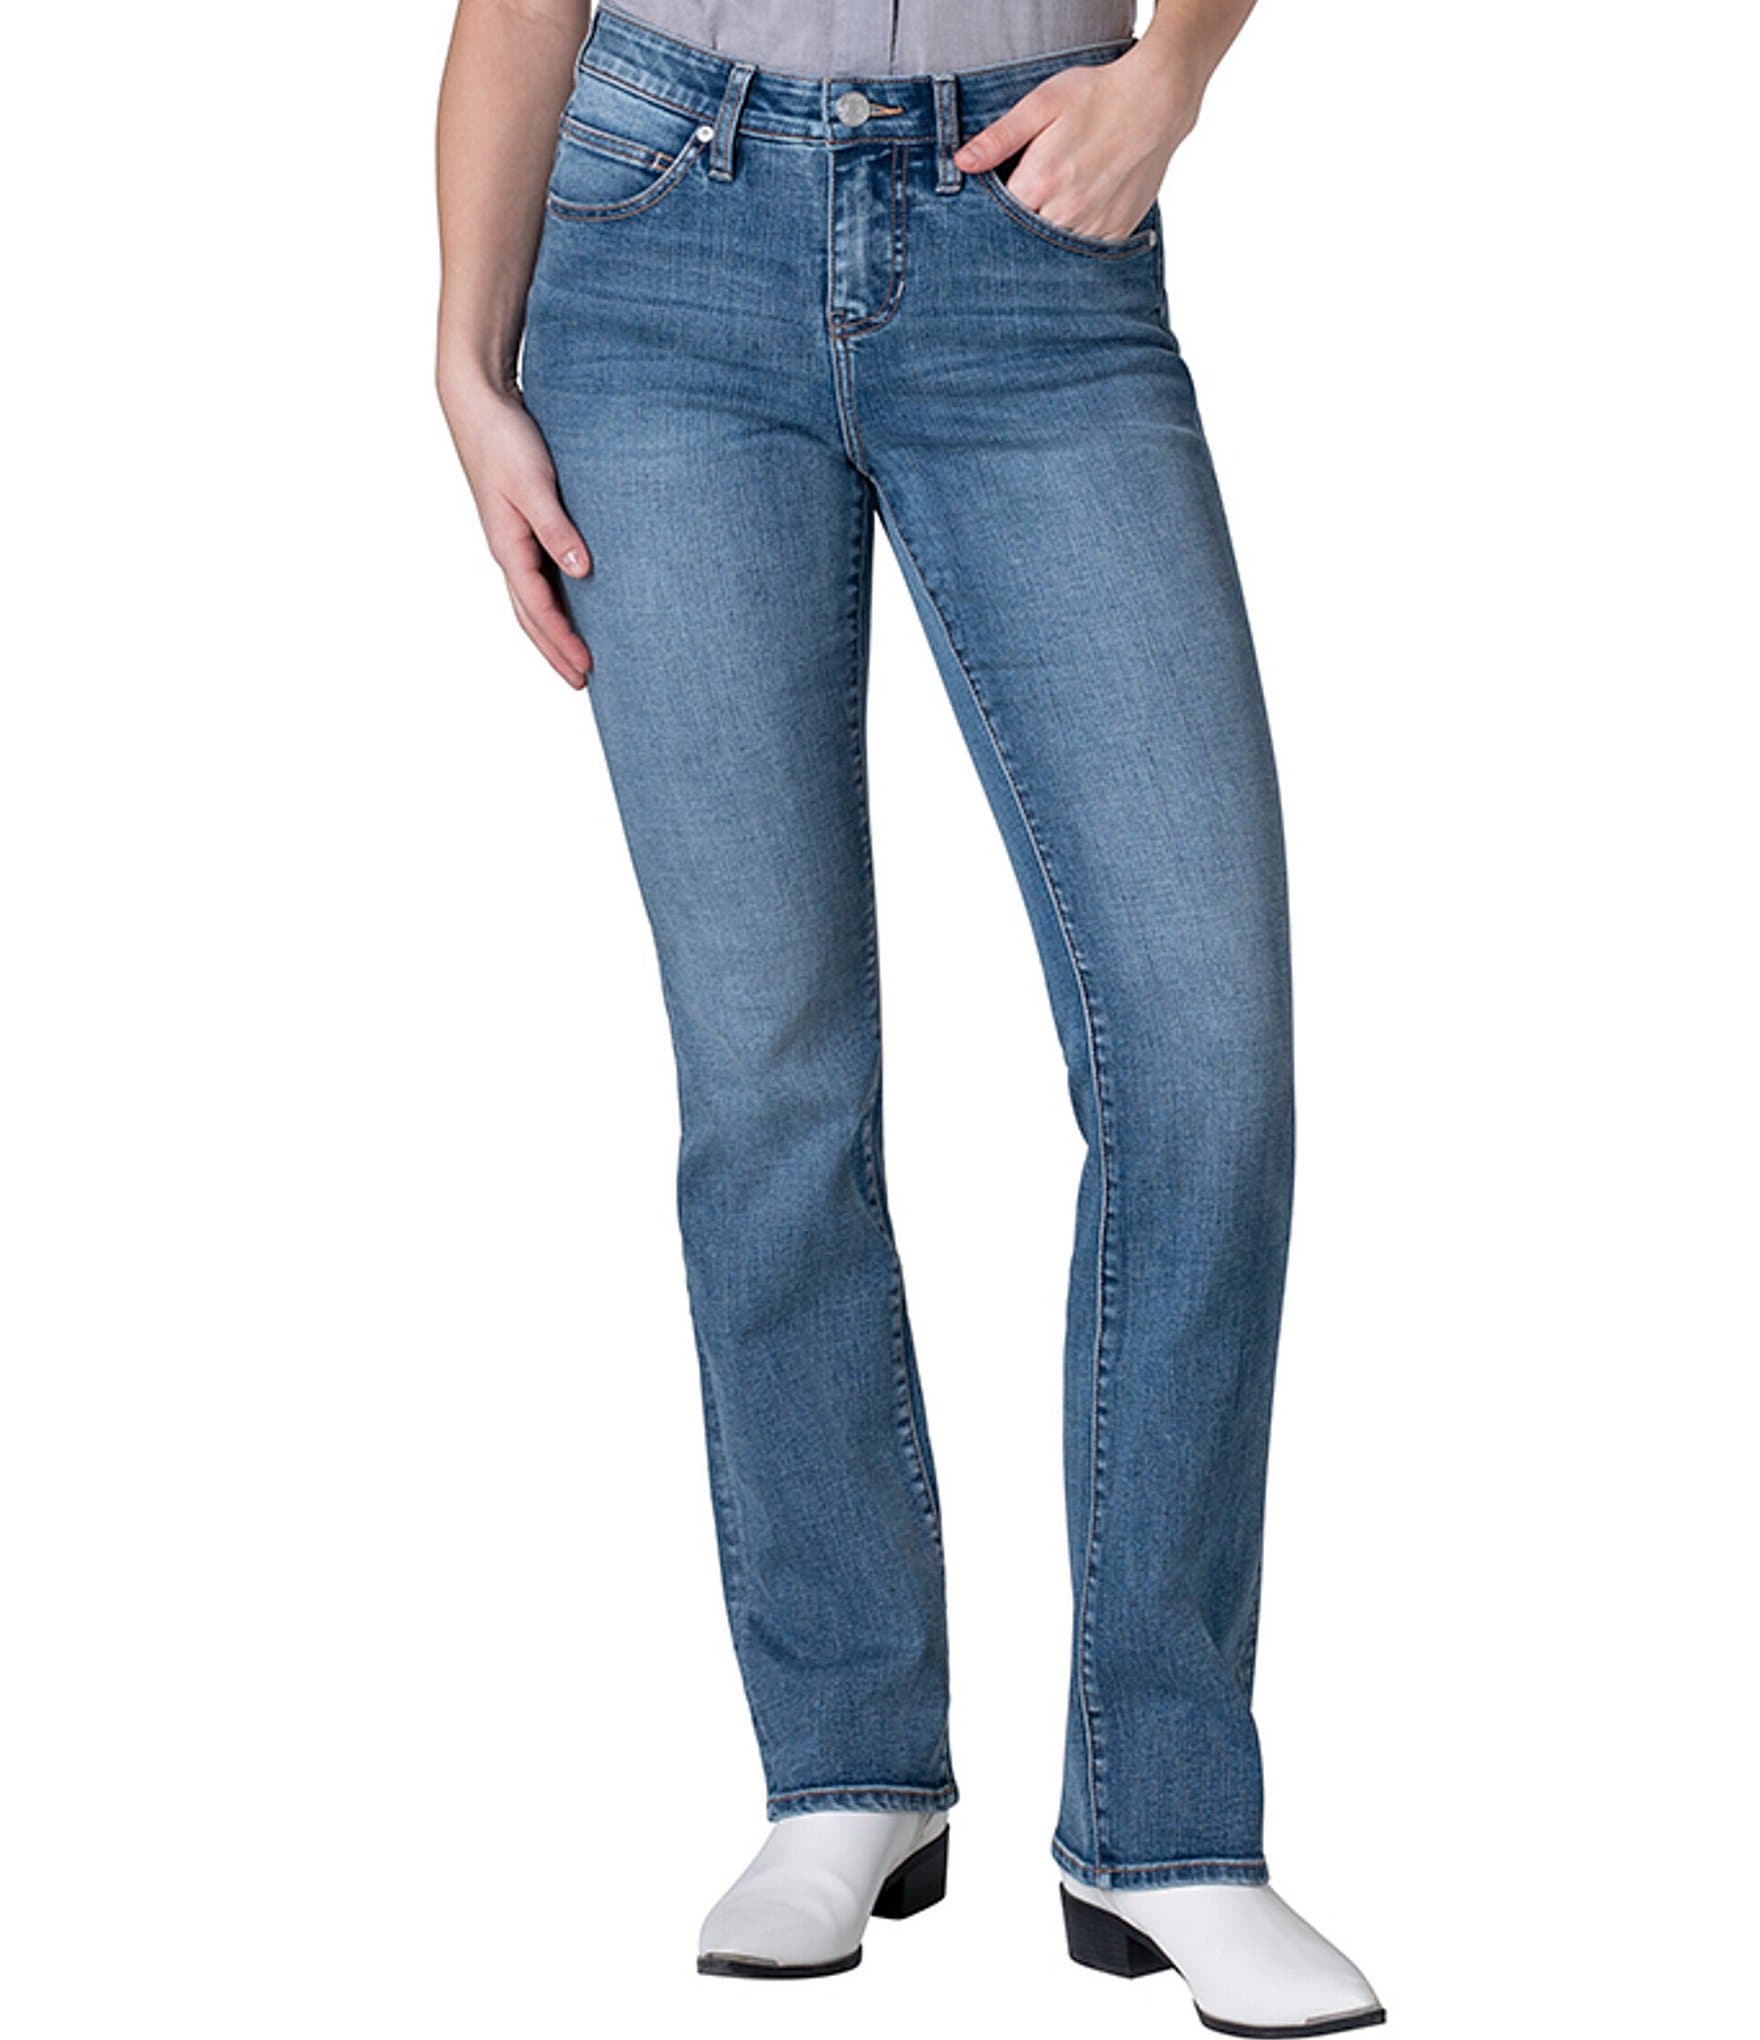 Women's Jag Jeans Pants & Leggings Under $100